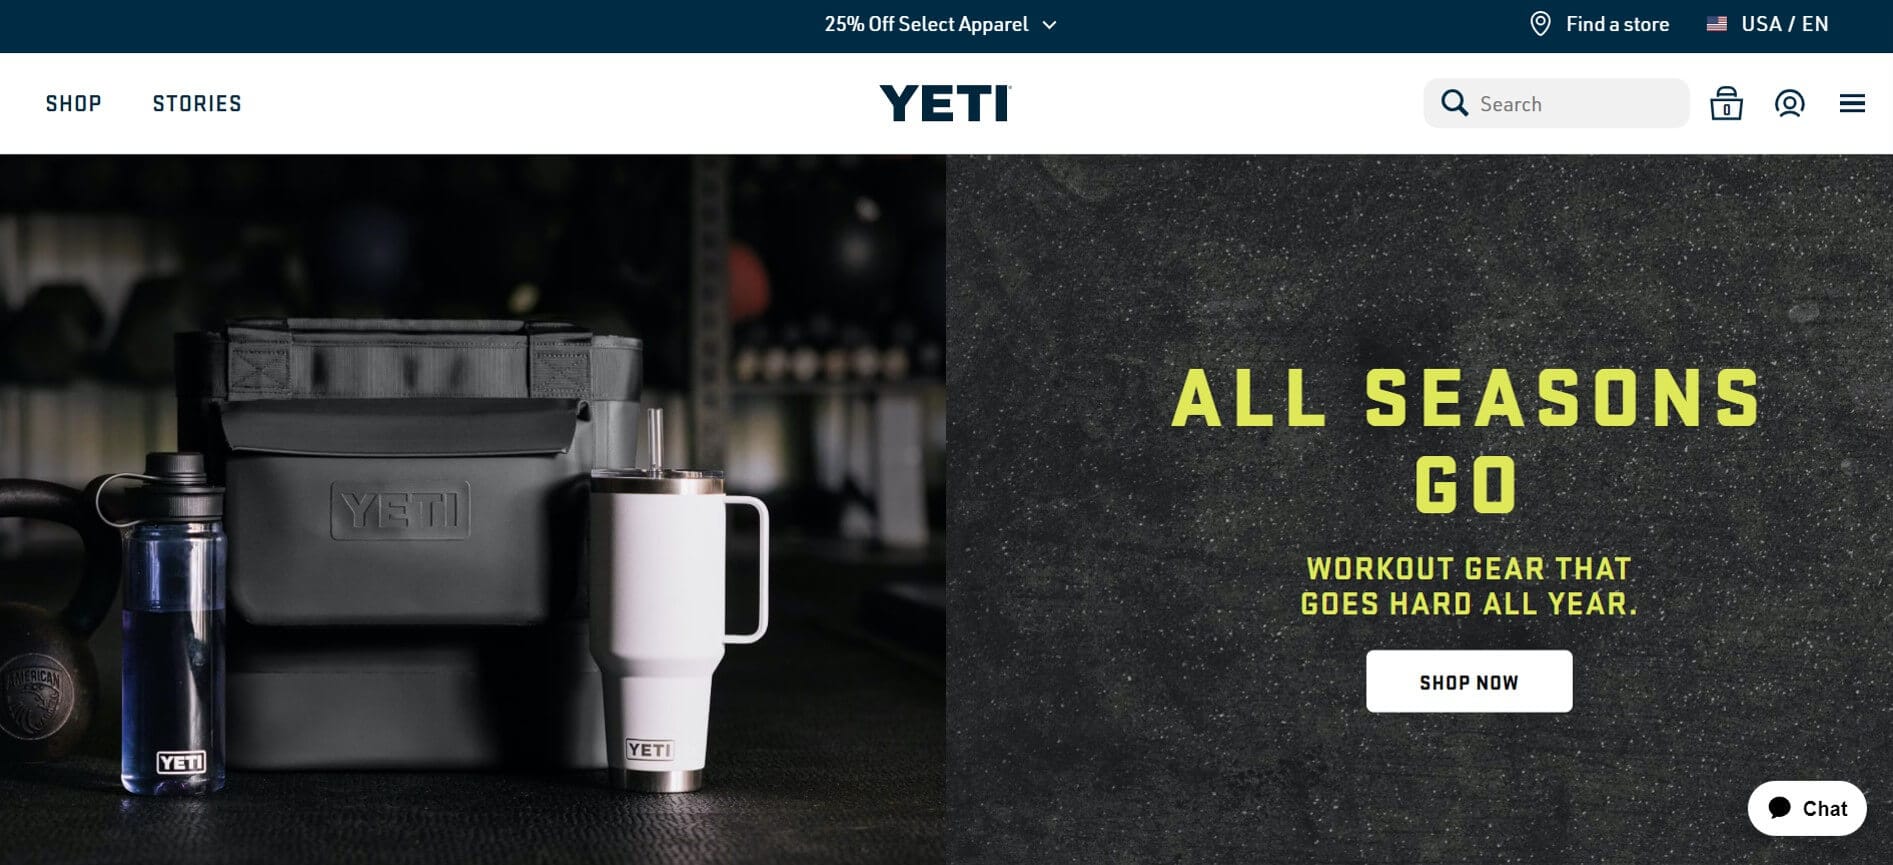 YETI website cover image